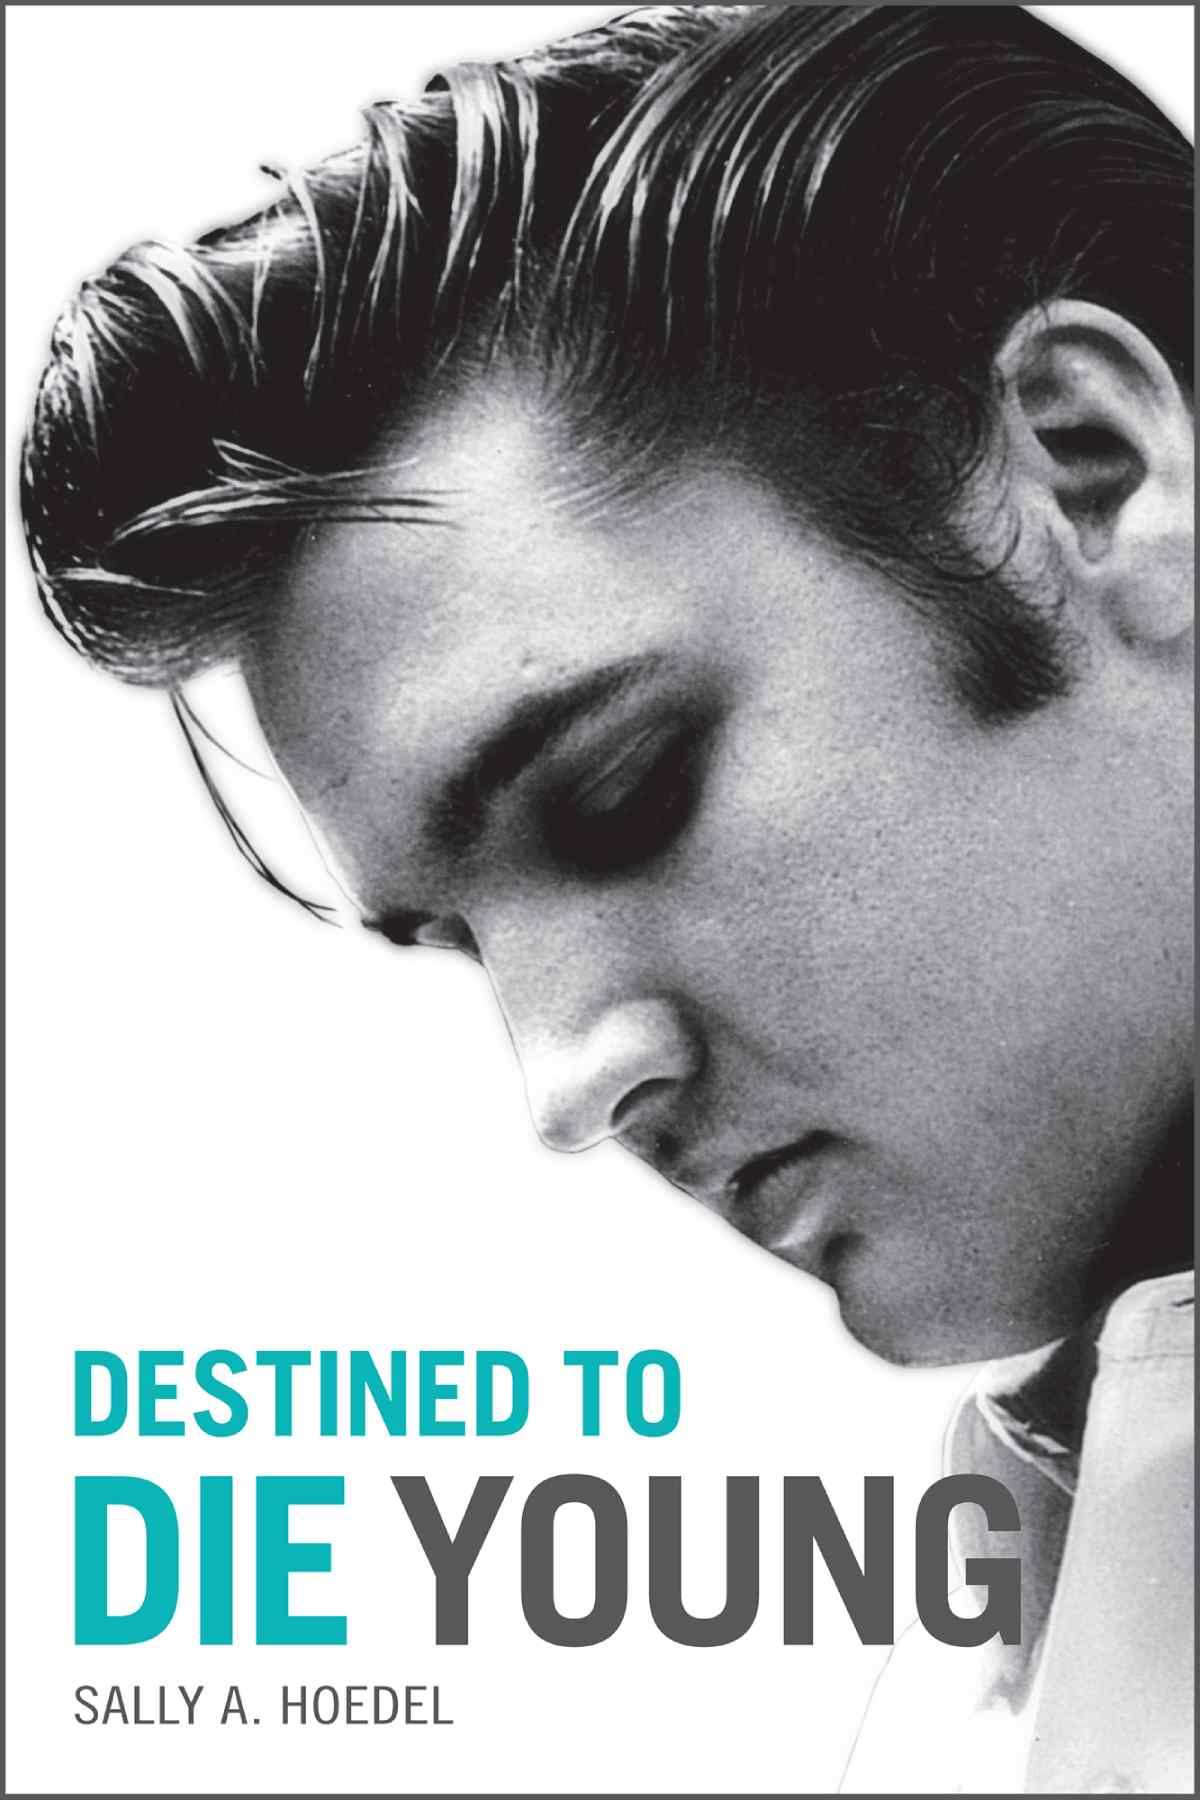 Elvis Detined To Die Young